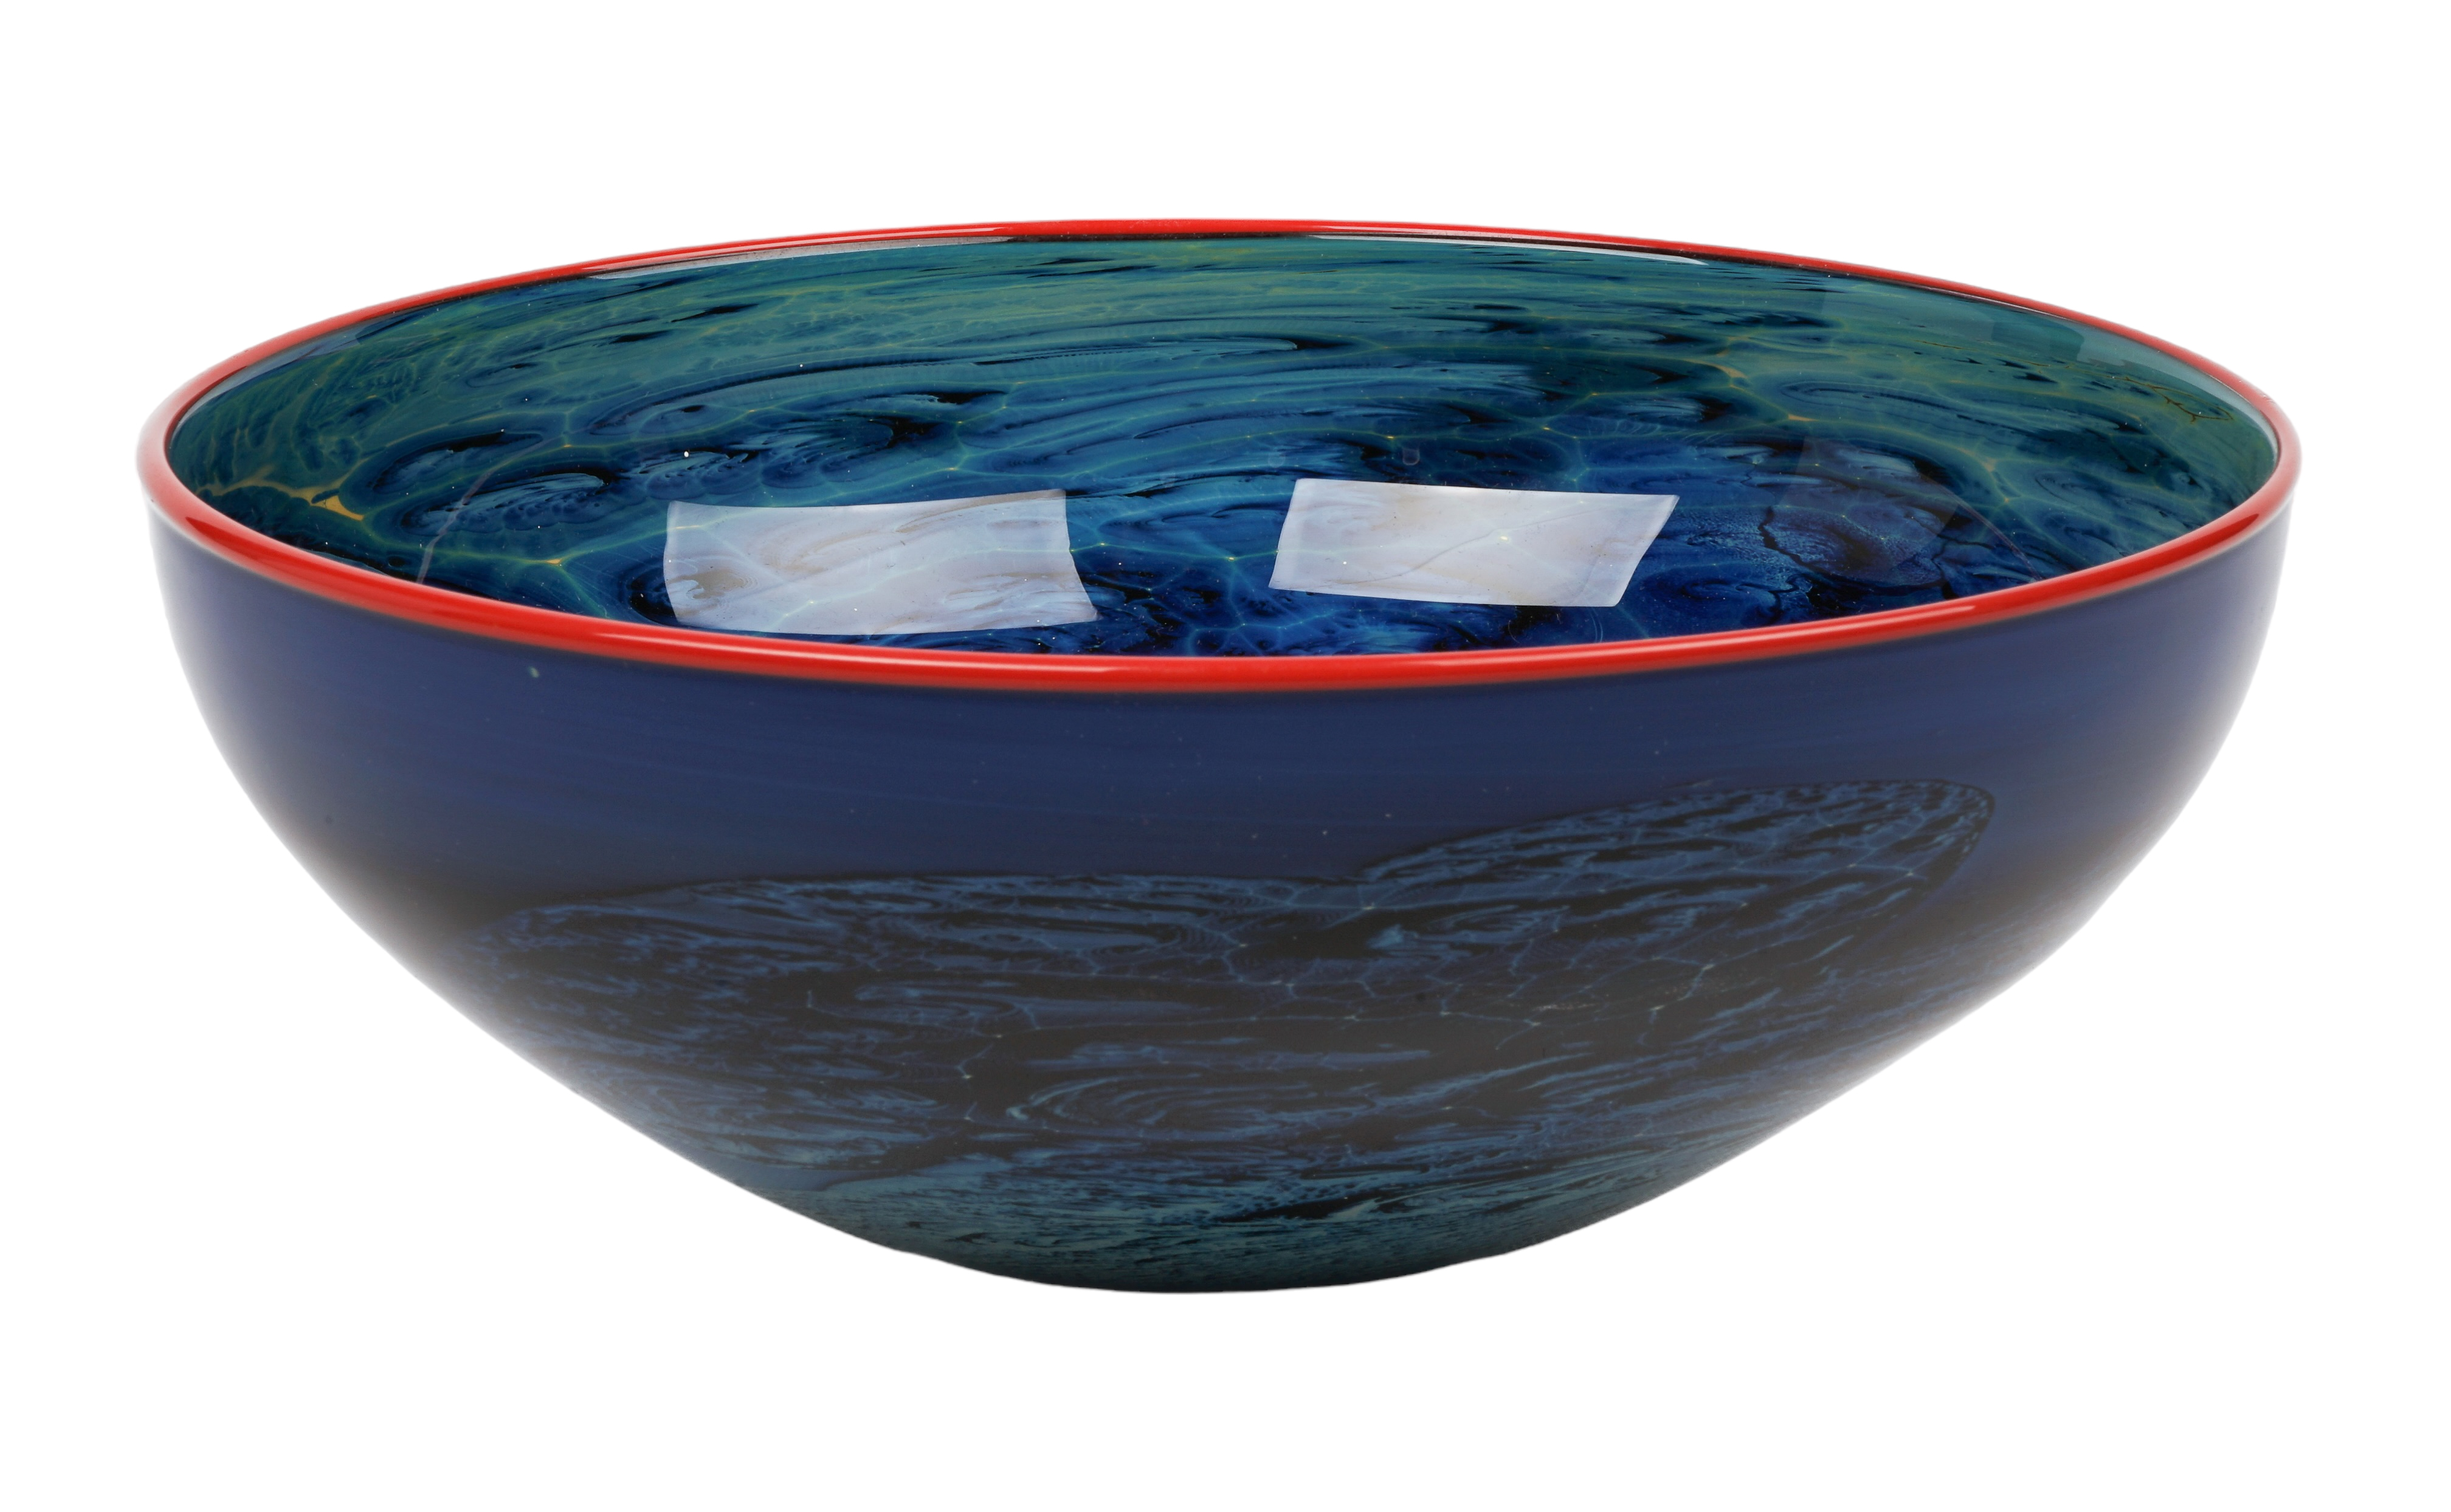 Josh Simpson art glass bowl New 2e238e